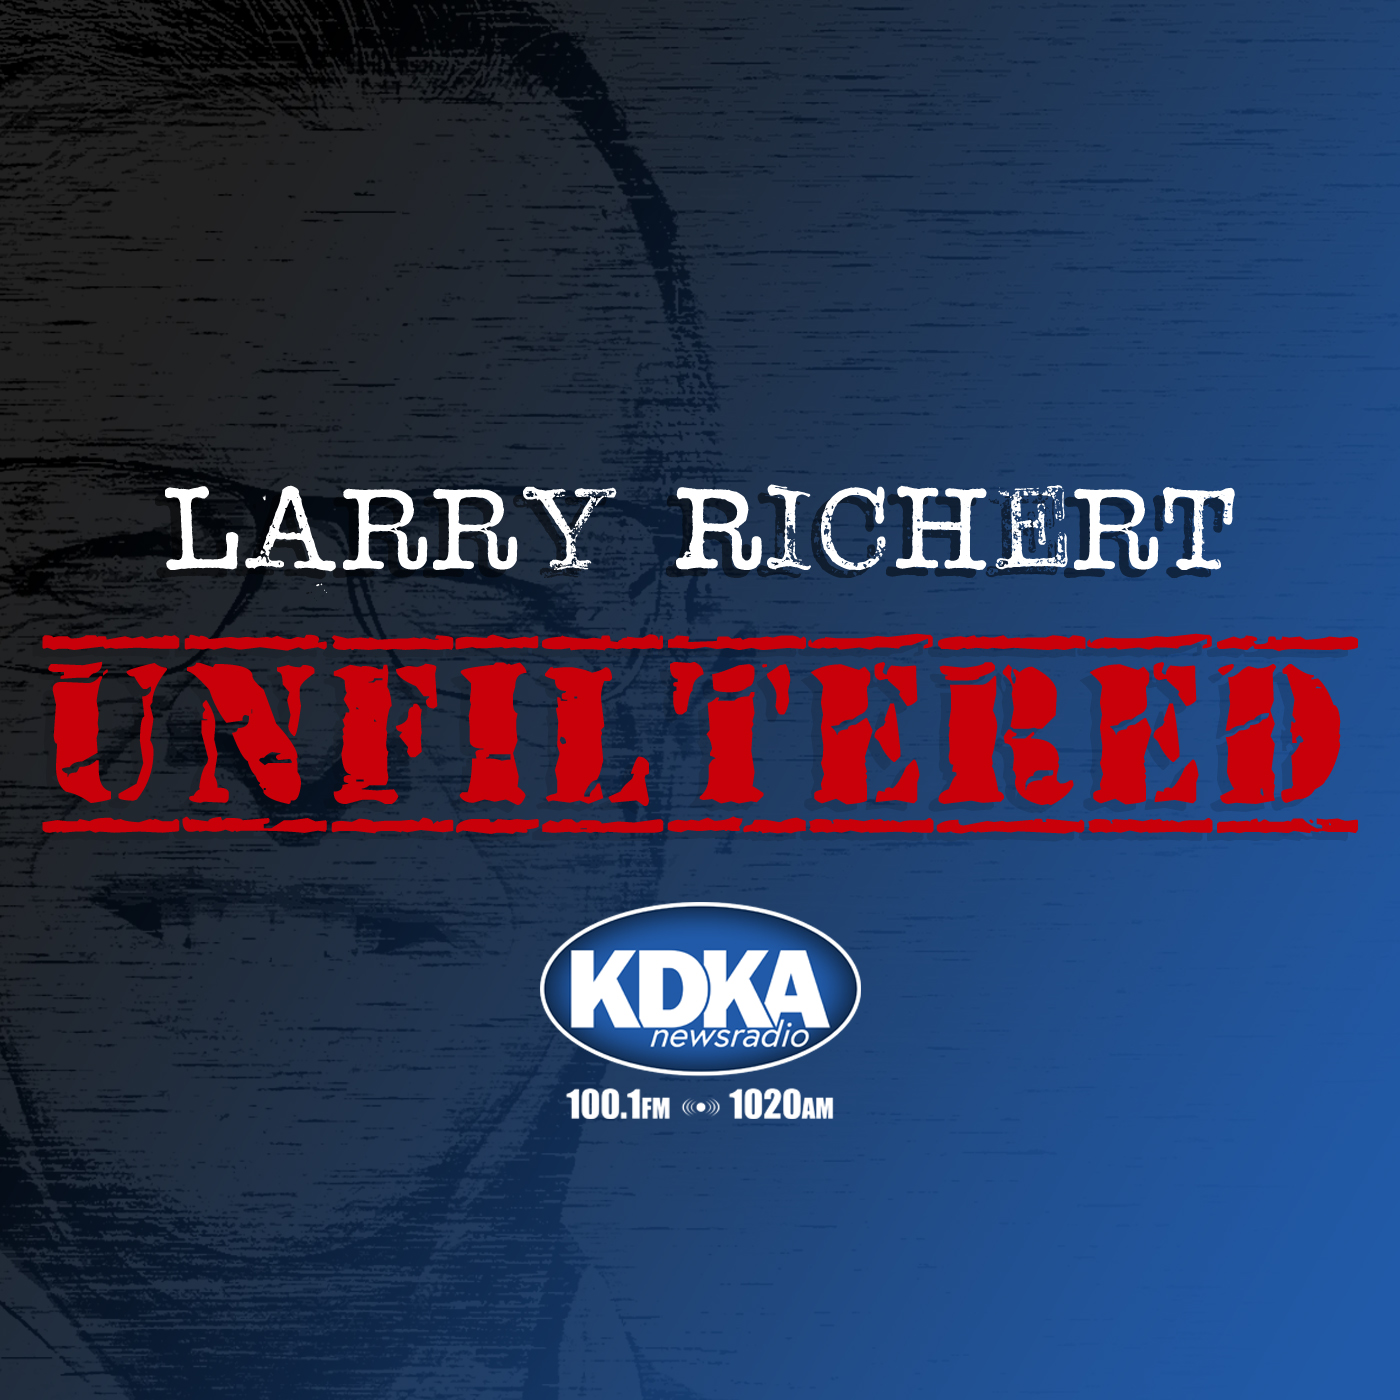 Podcast Episode #47 Larry Richert: Unfiltered